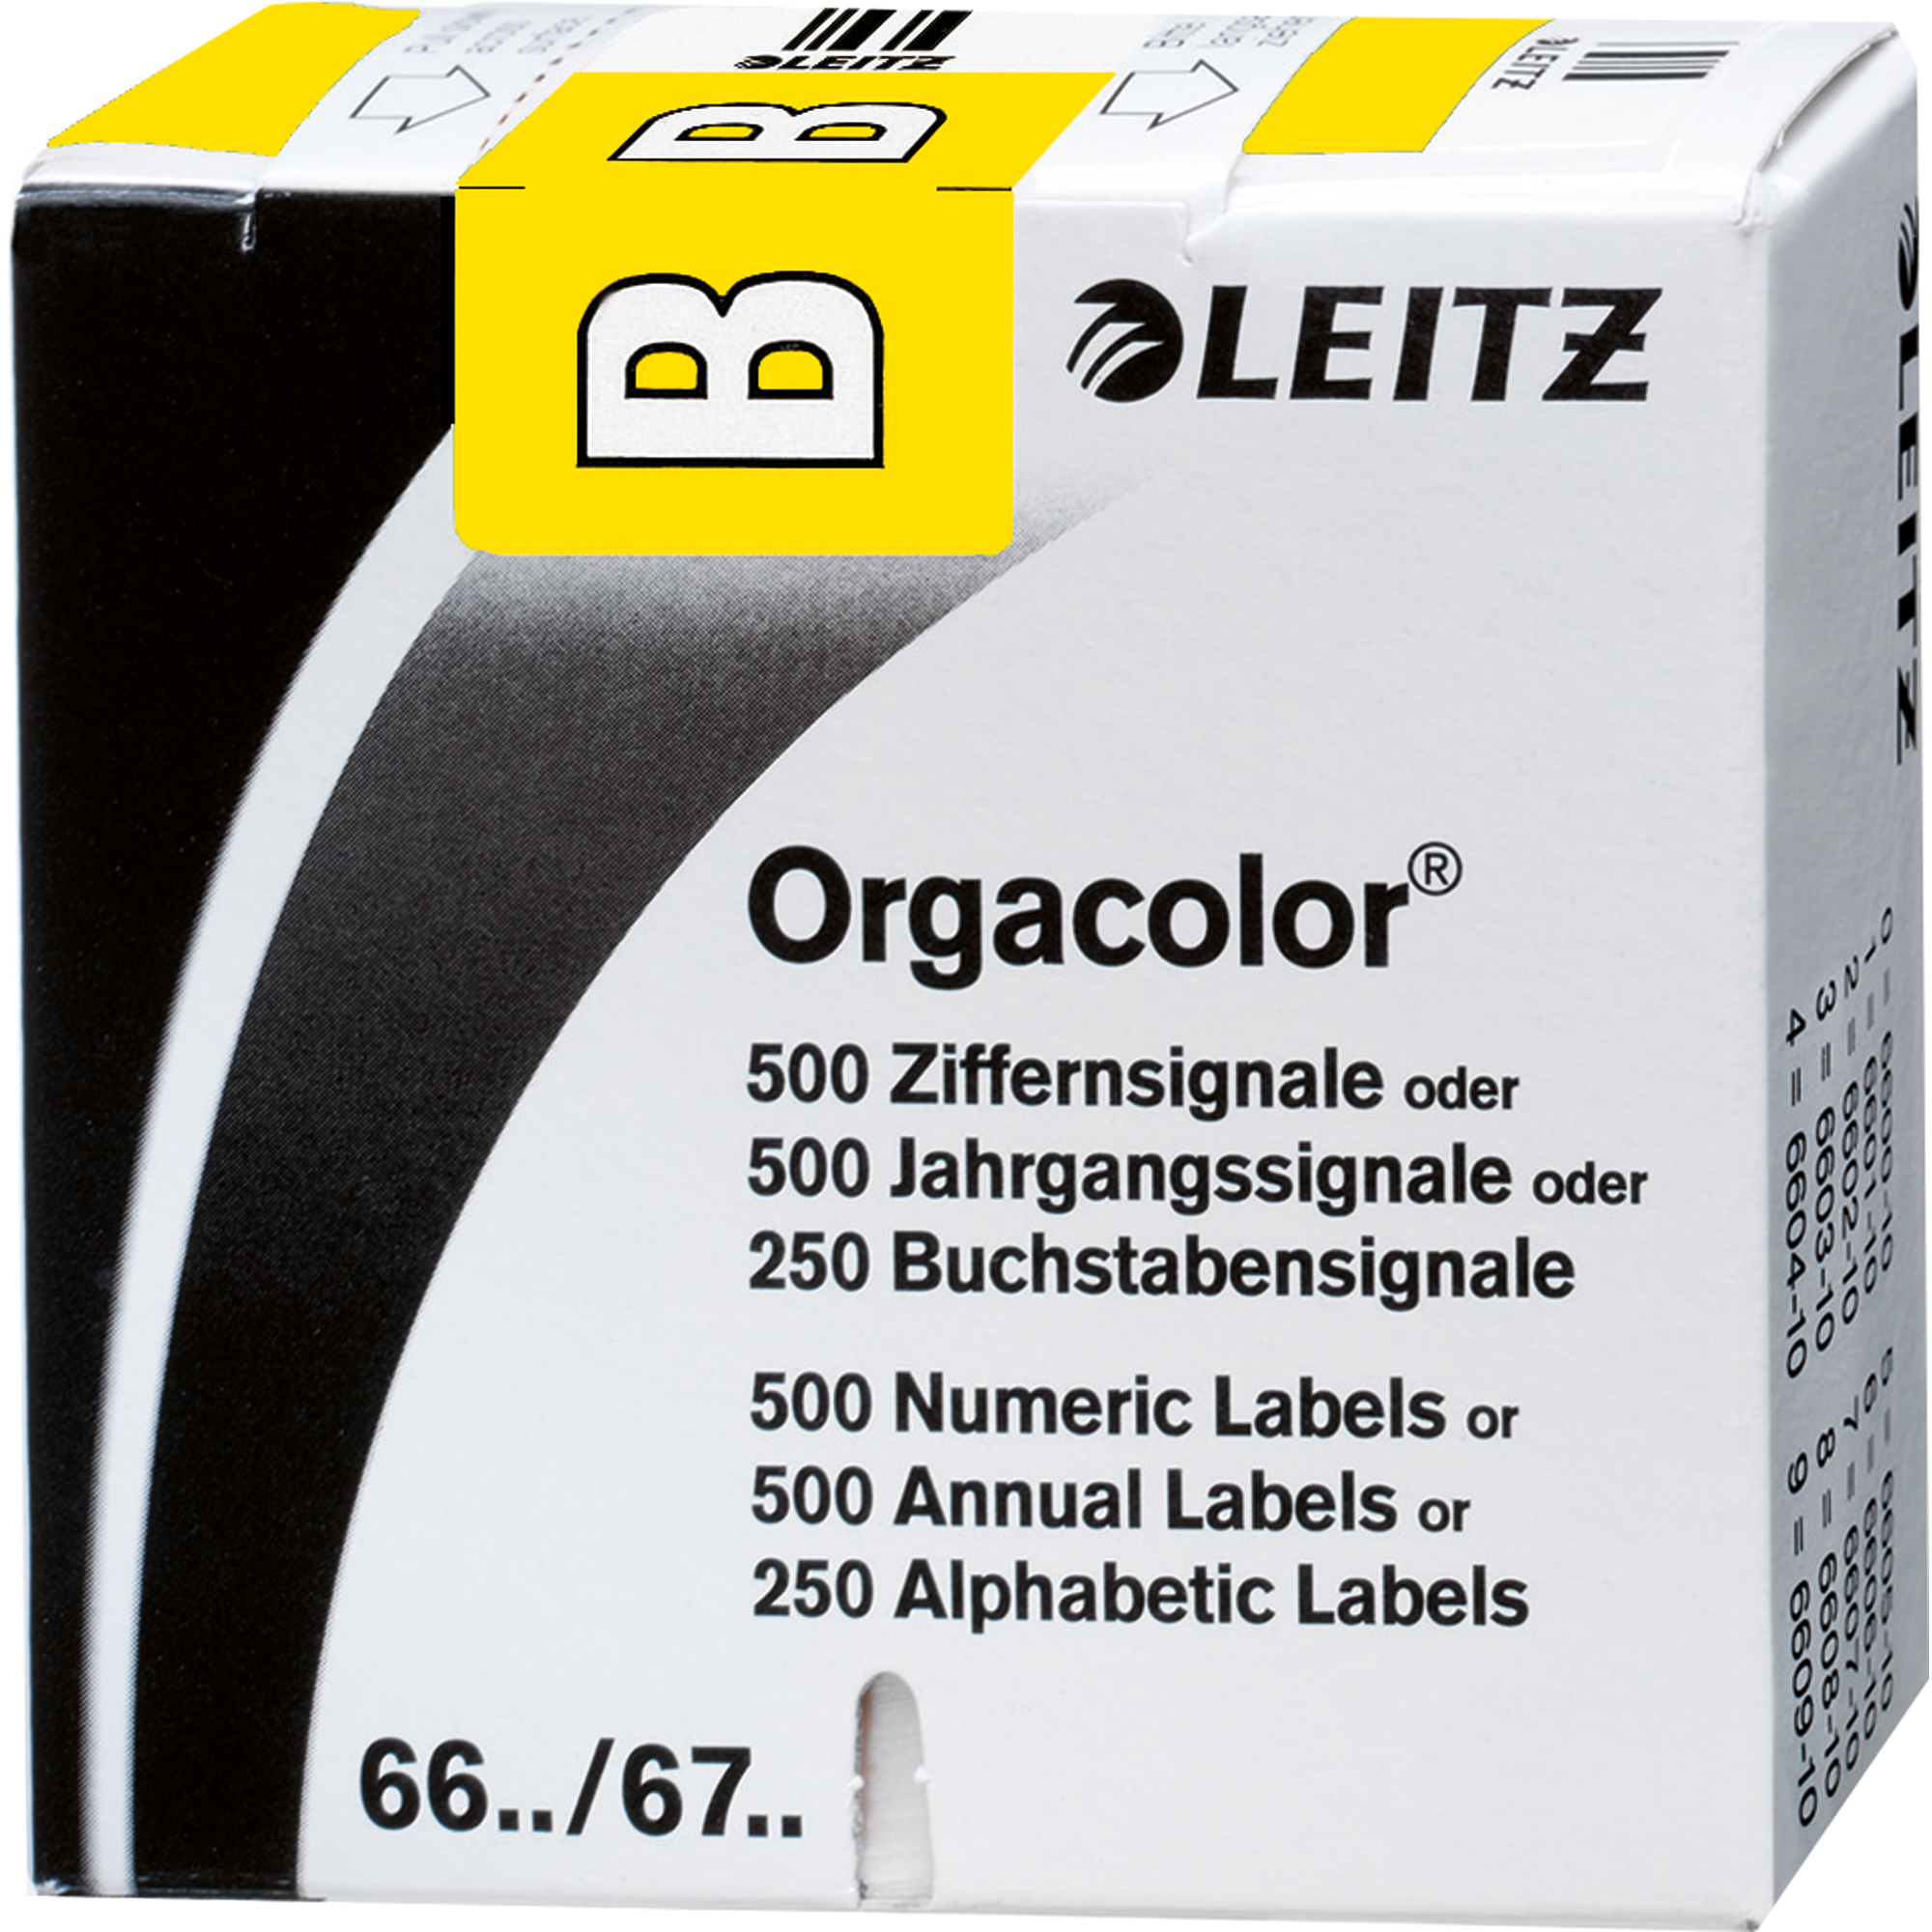 Leitz Buchstabensignal Orgacolor® gelb B